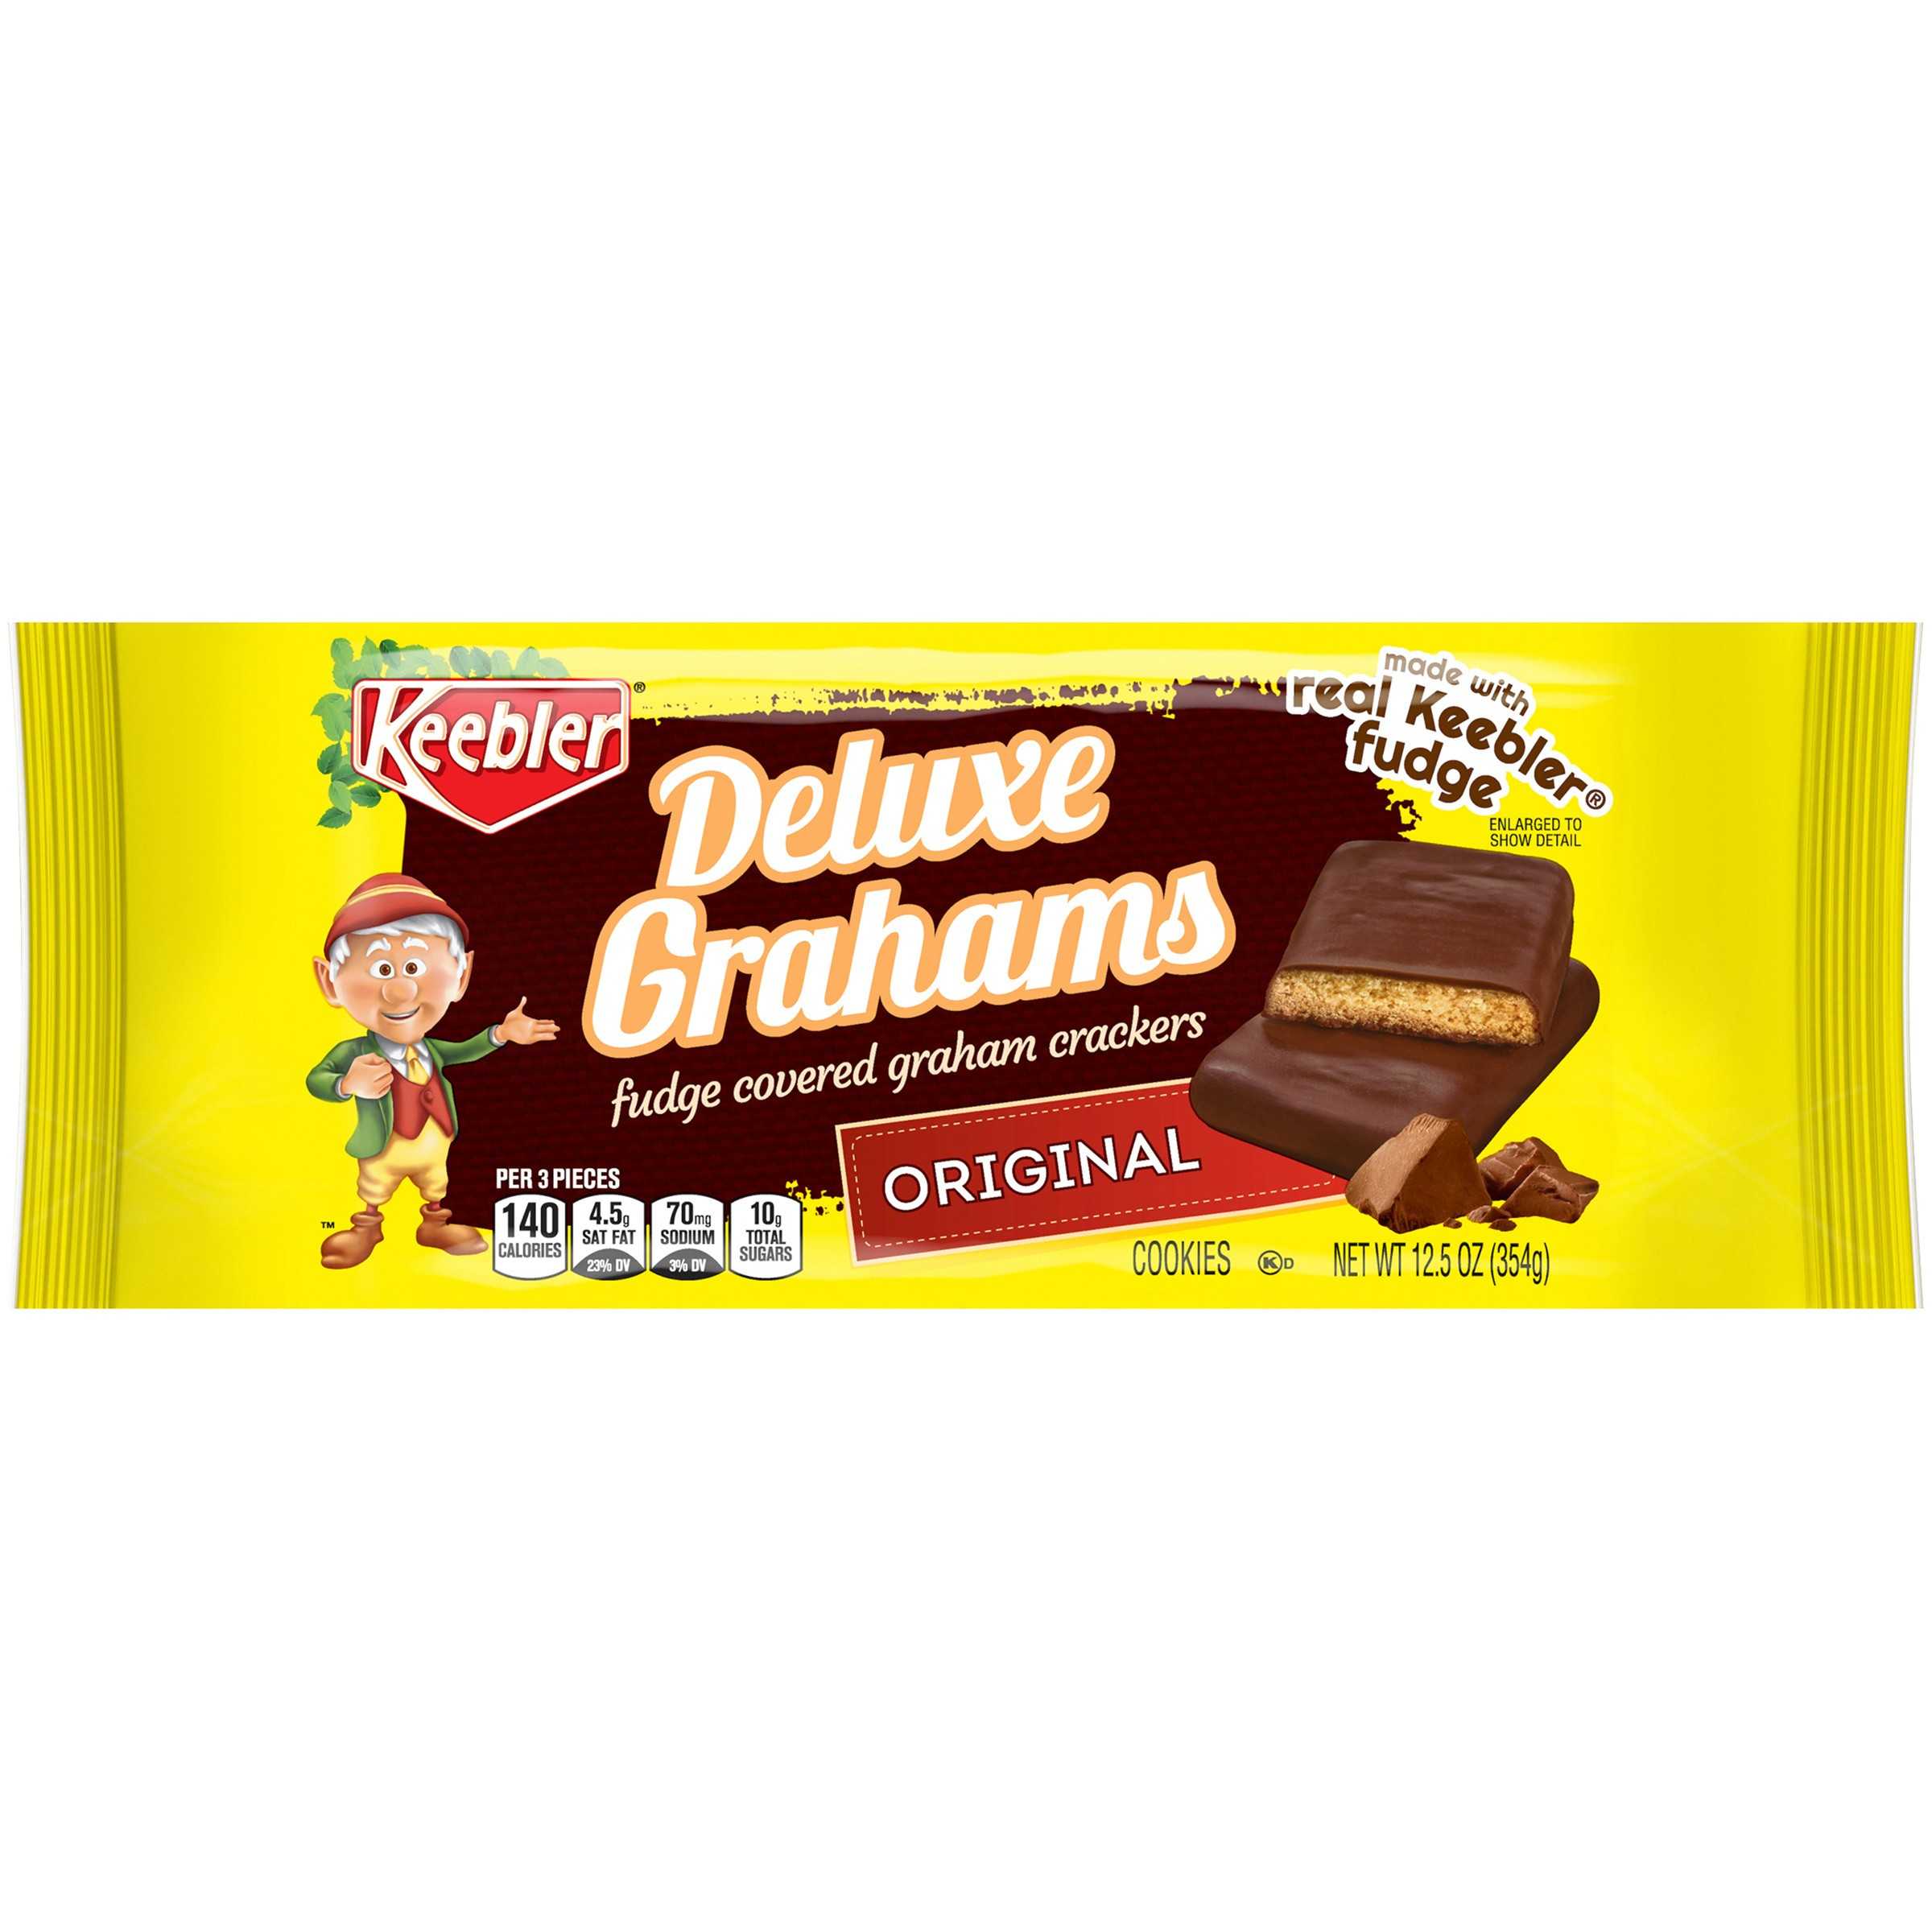 Keebler Deluxe Grahams Original Cookies 12.5 oz. Pack